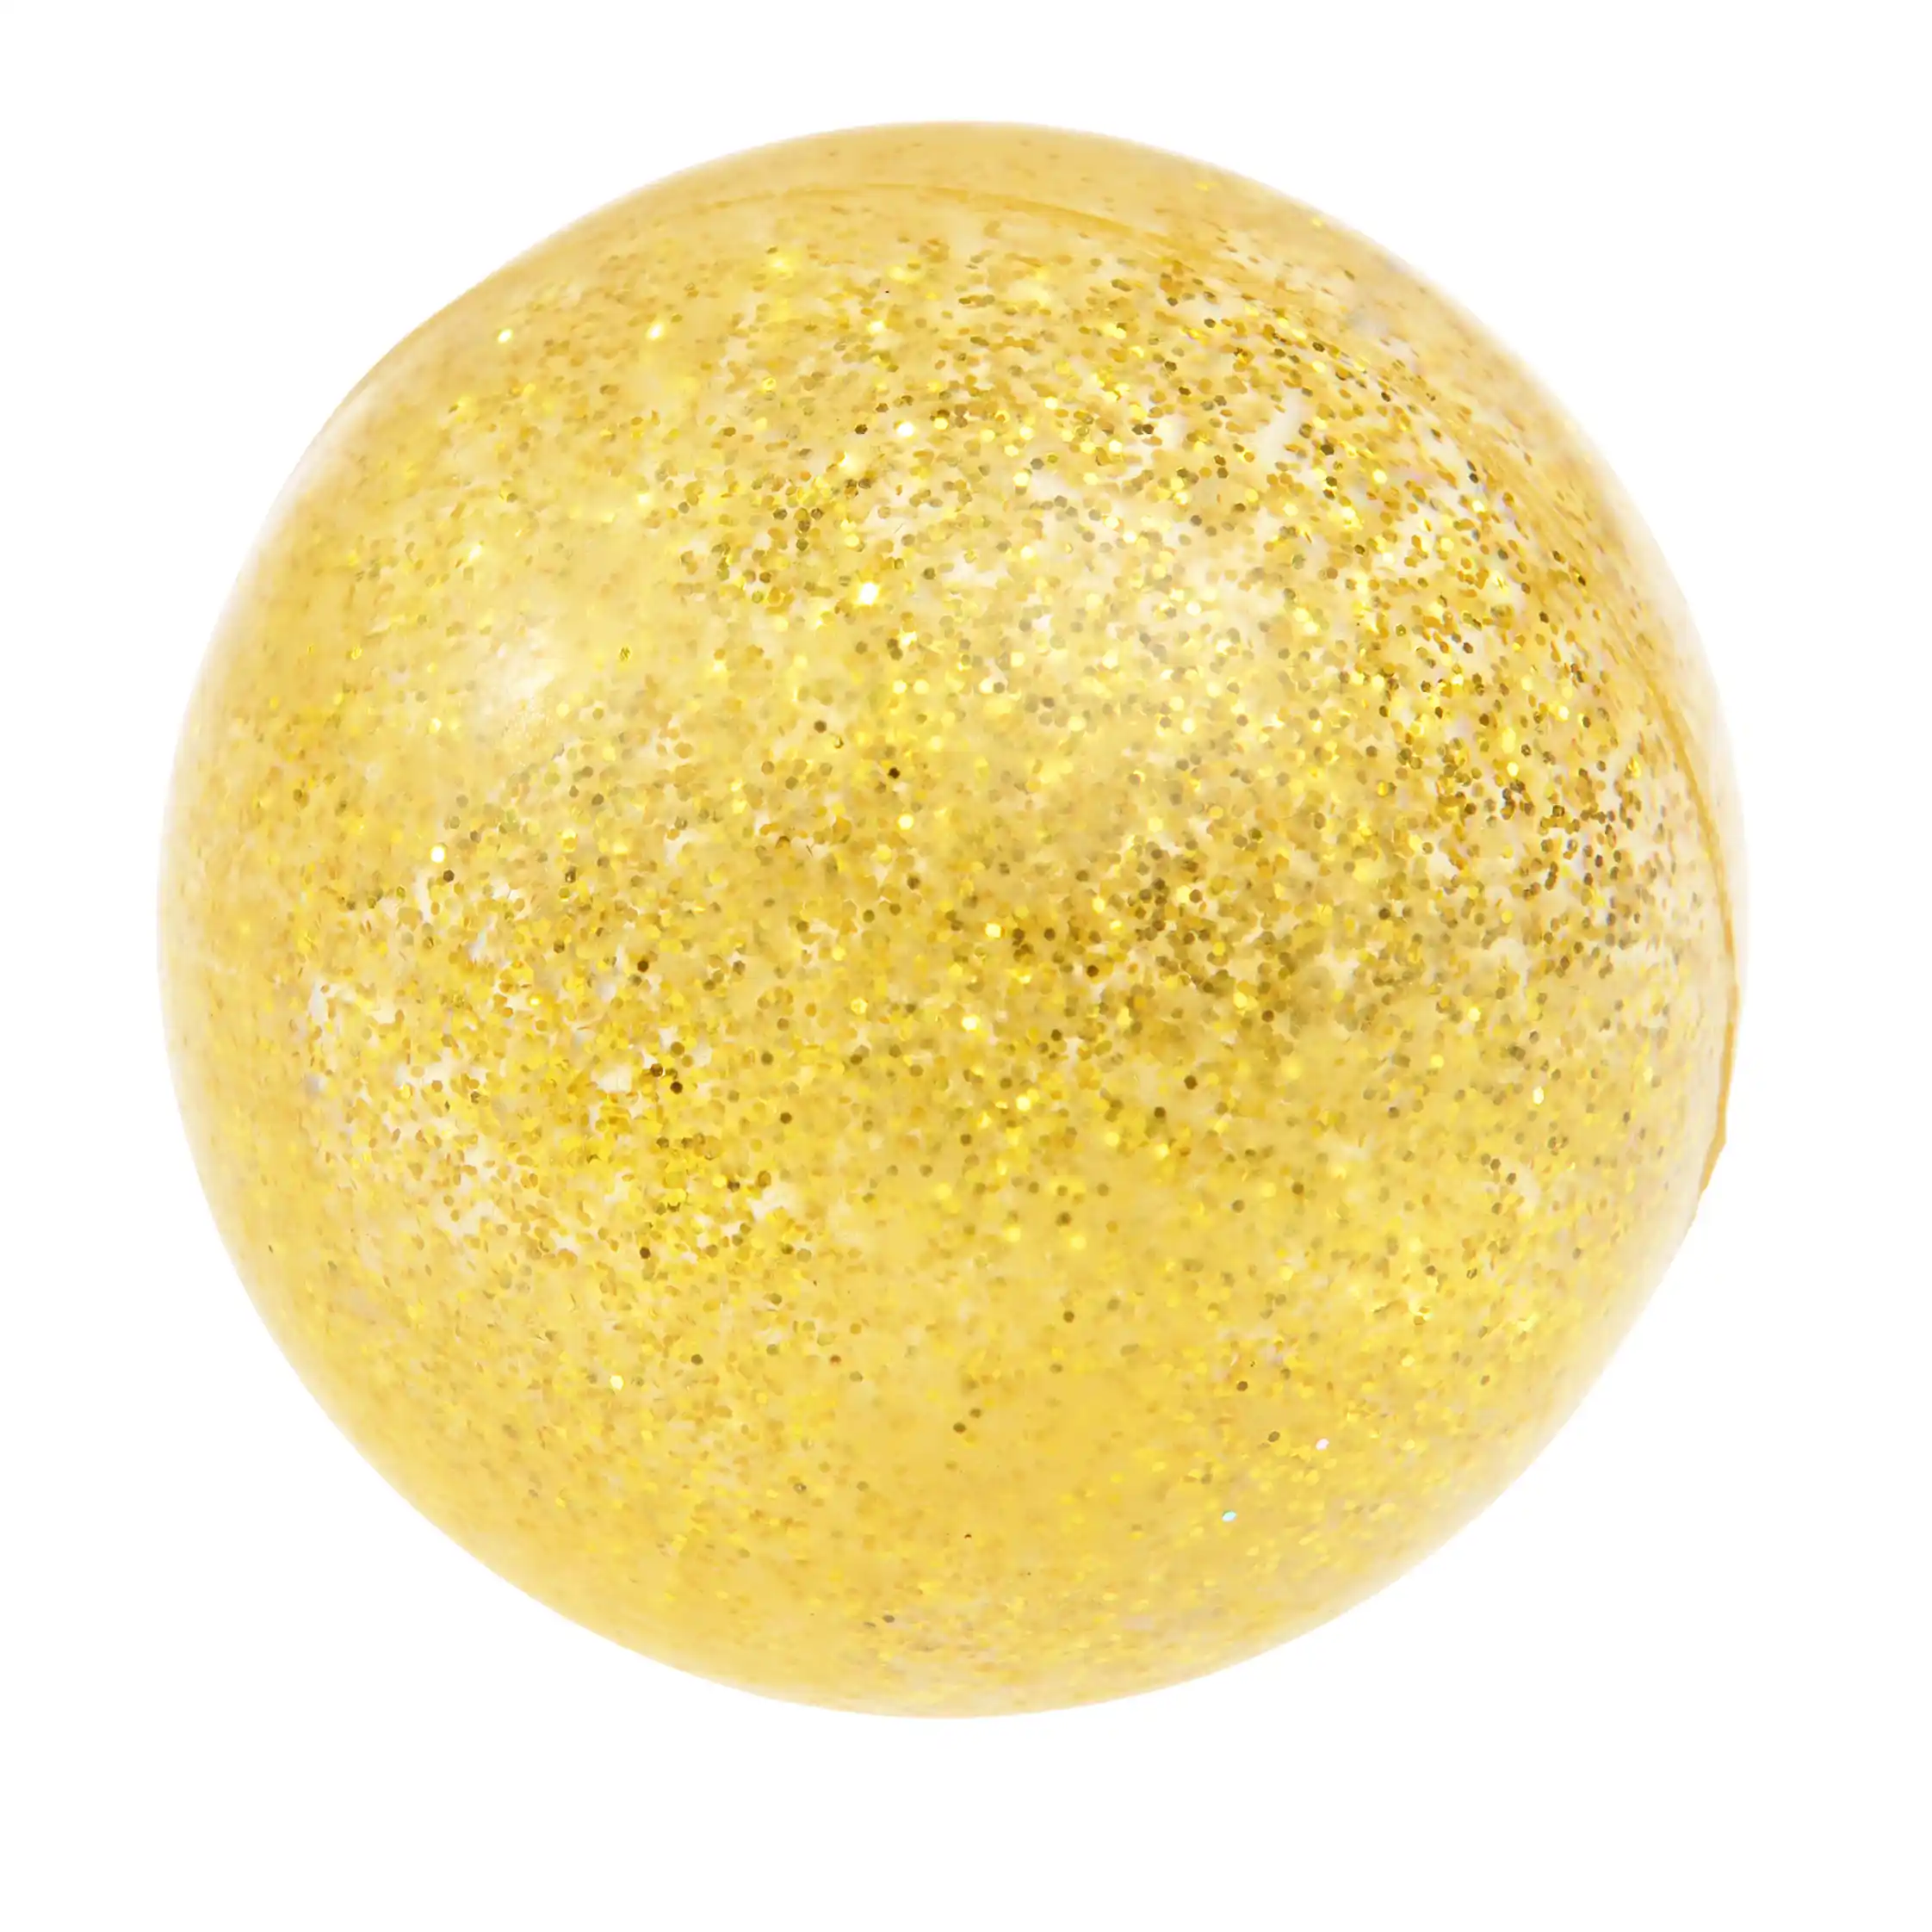 glitter bouncy ball - gold dog